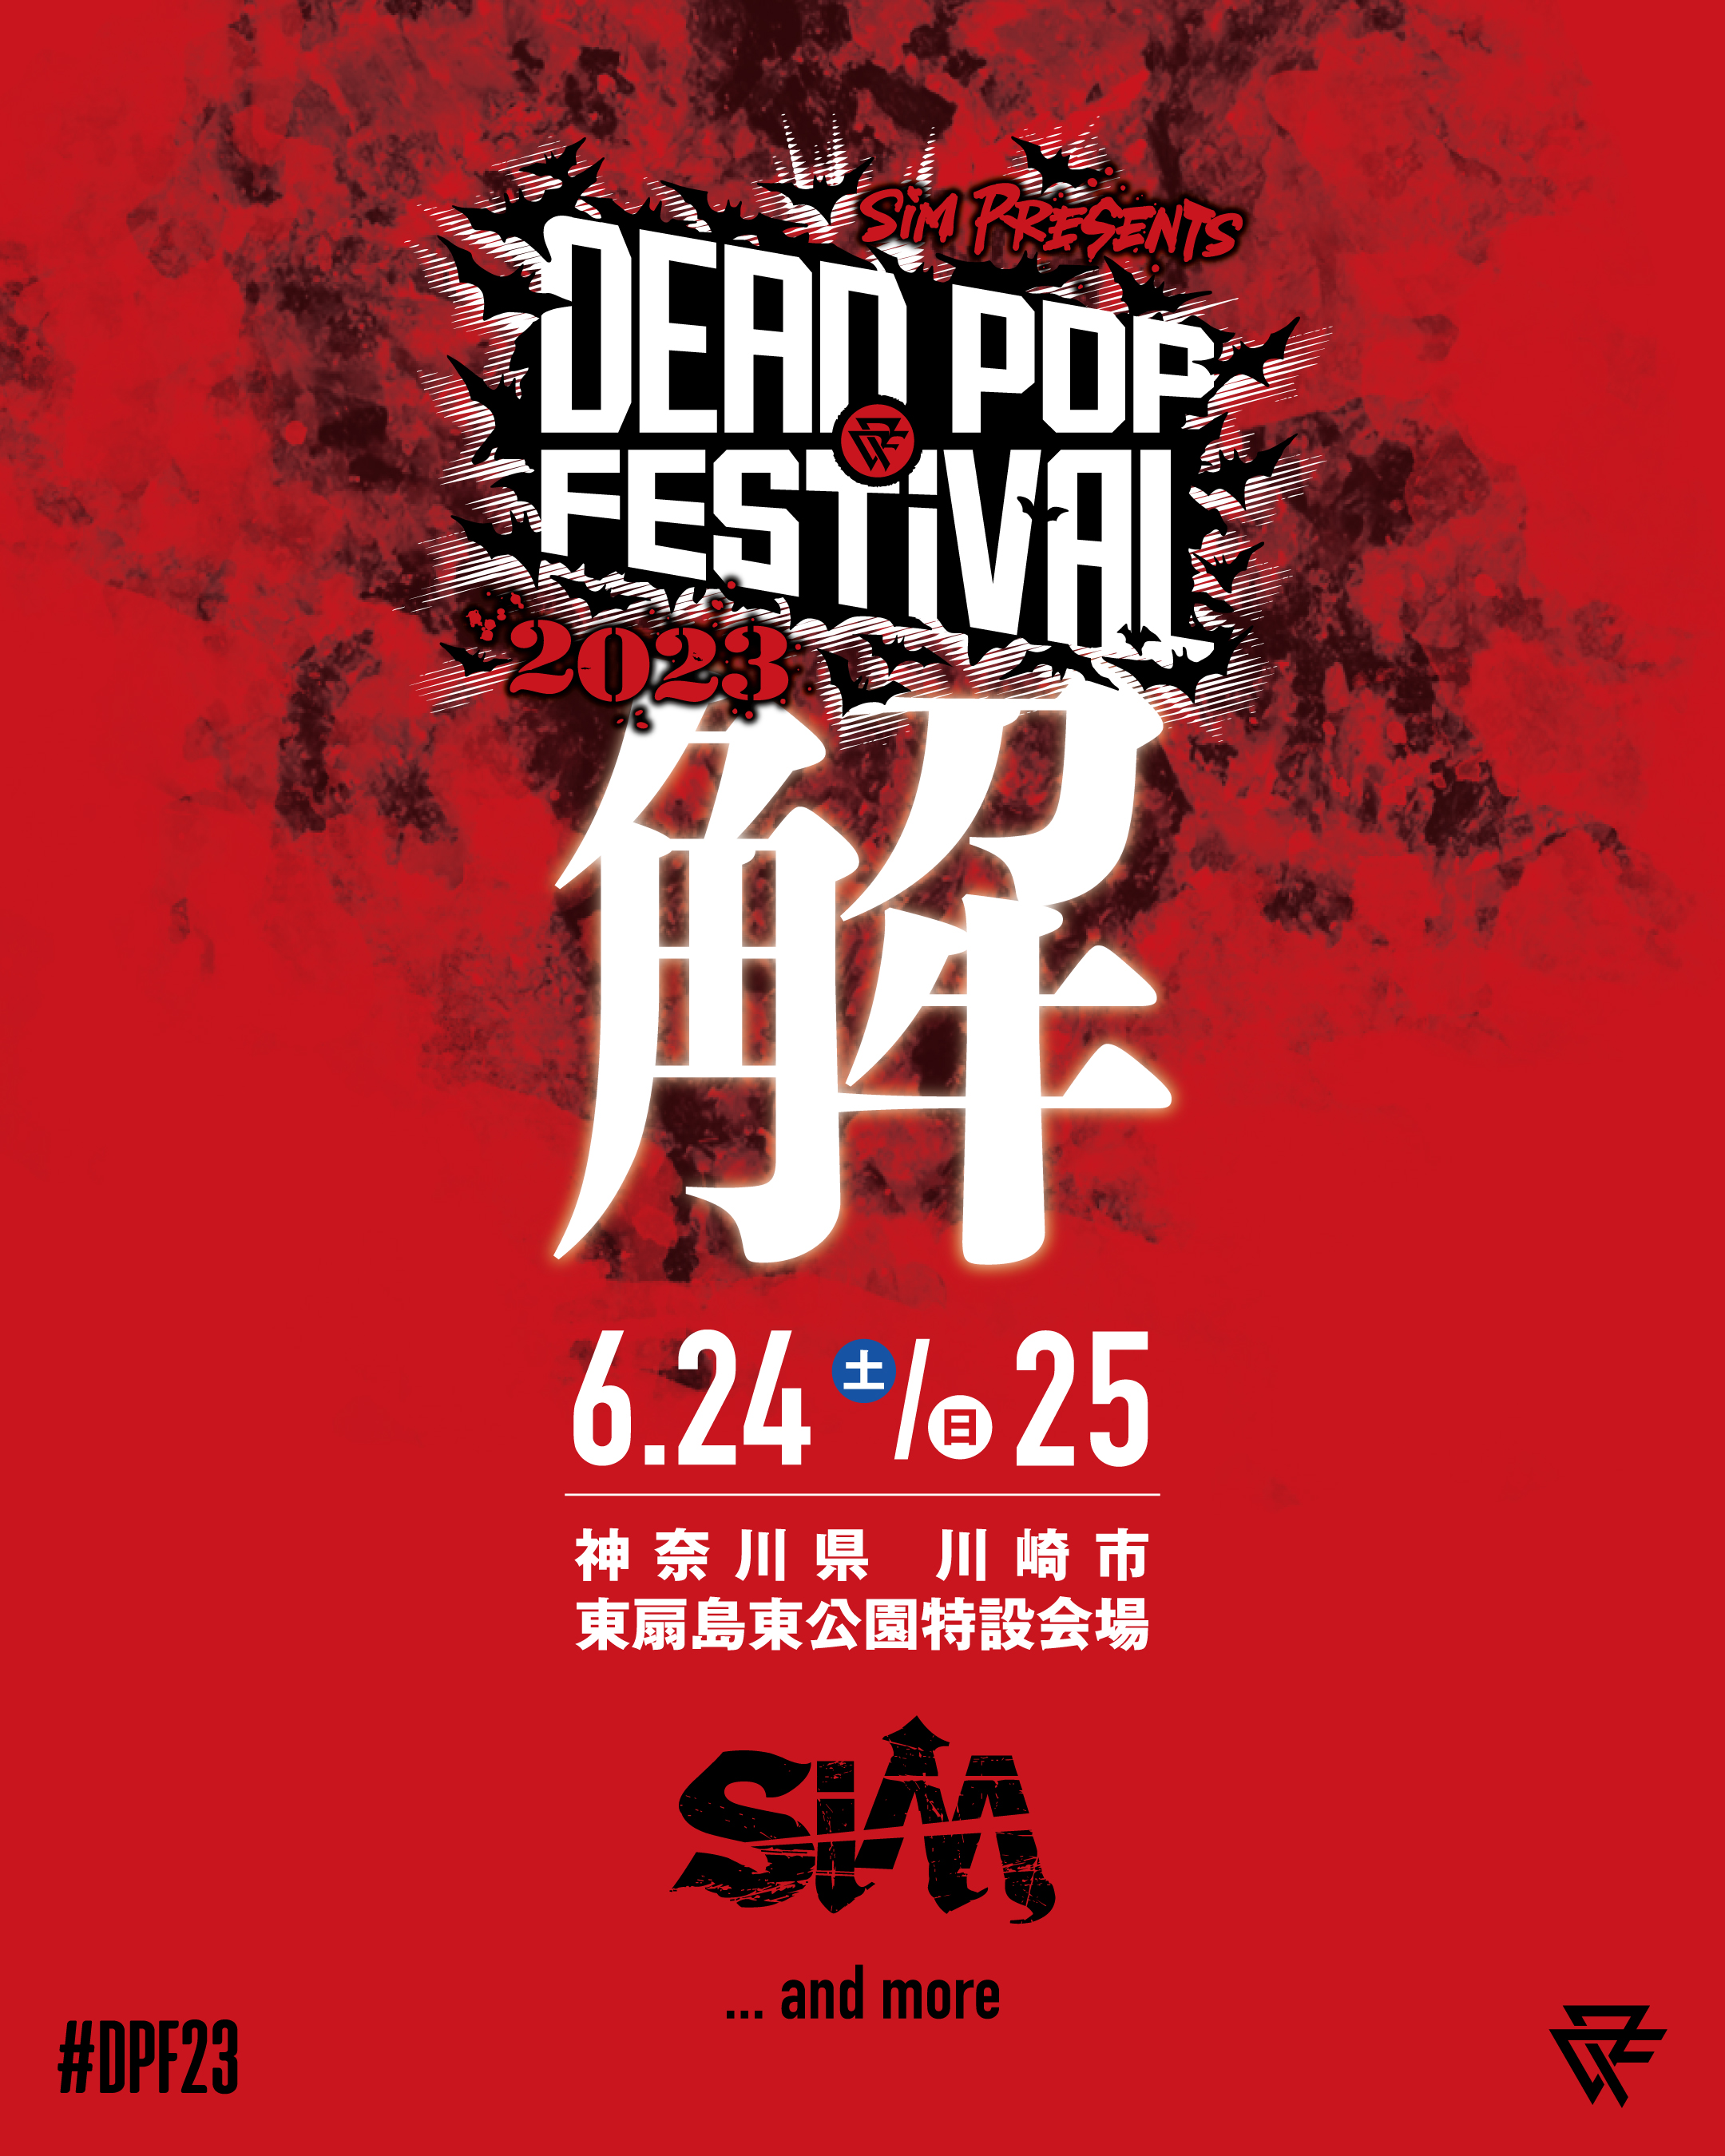 「DEAD POP FESTiVAL 2023 -解-」